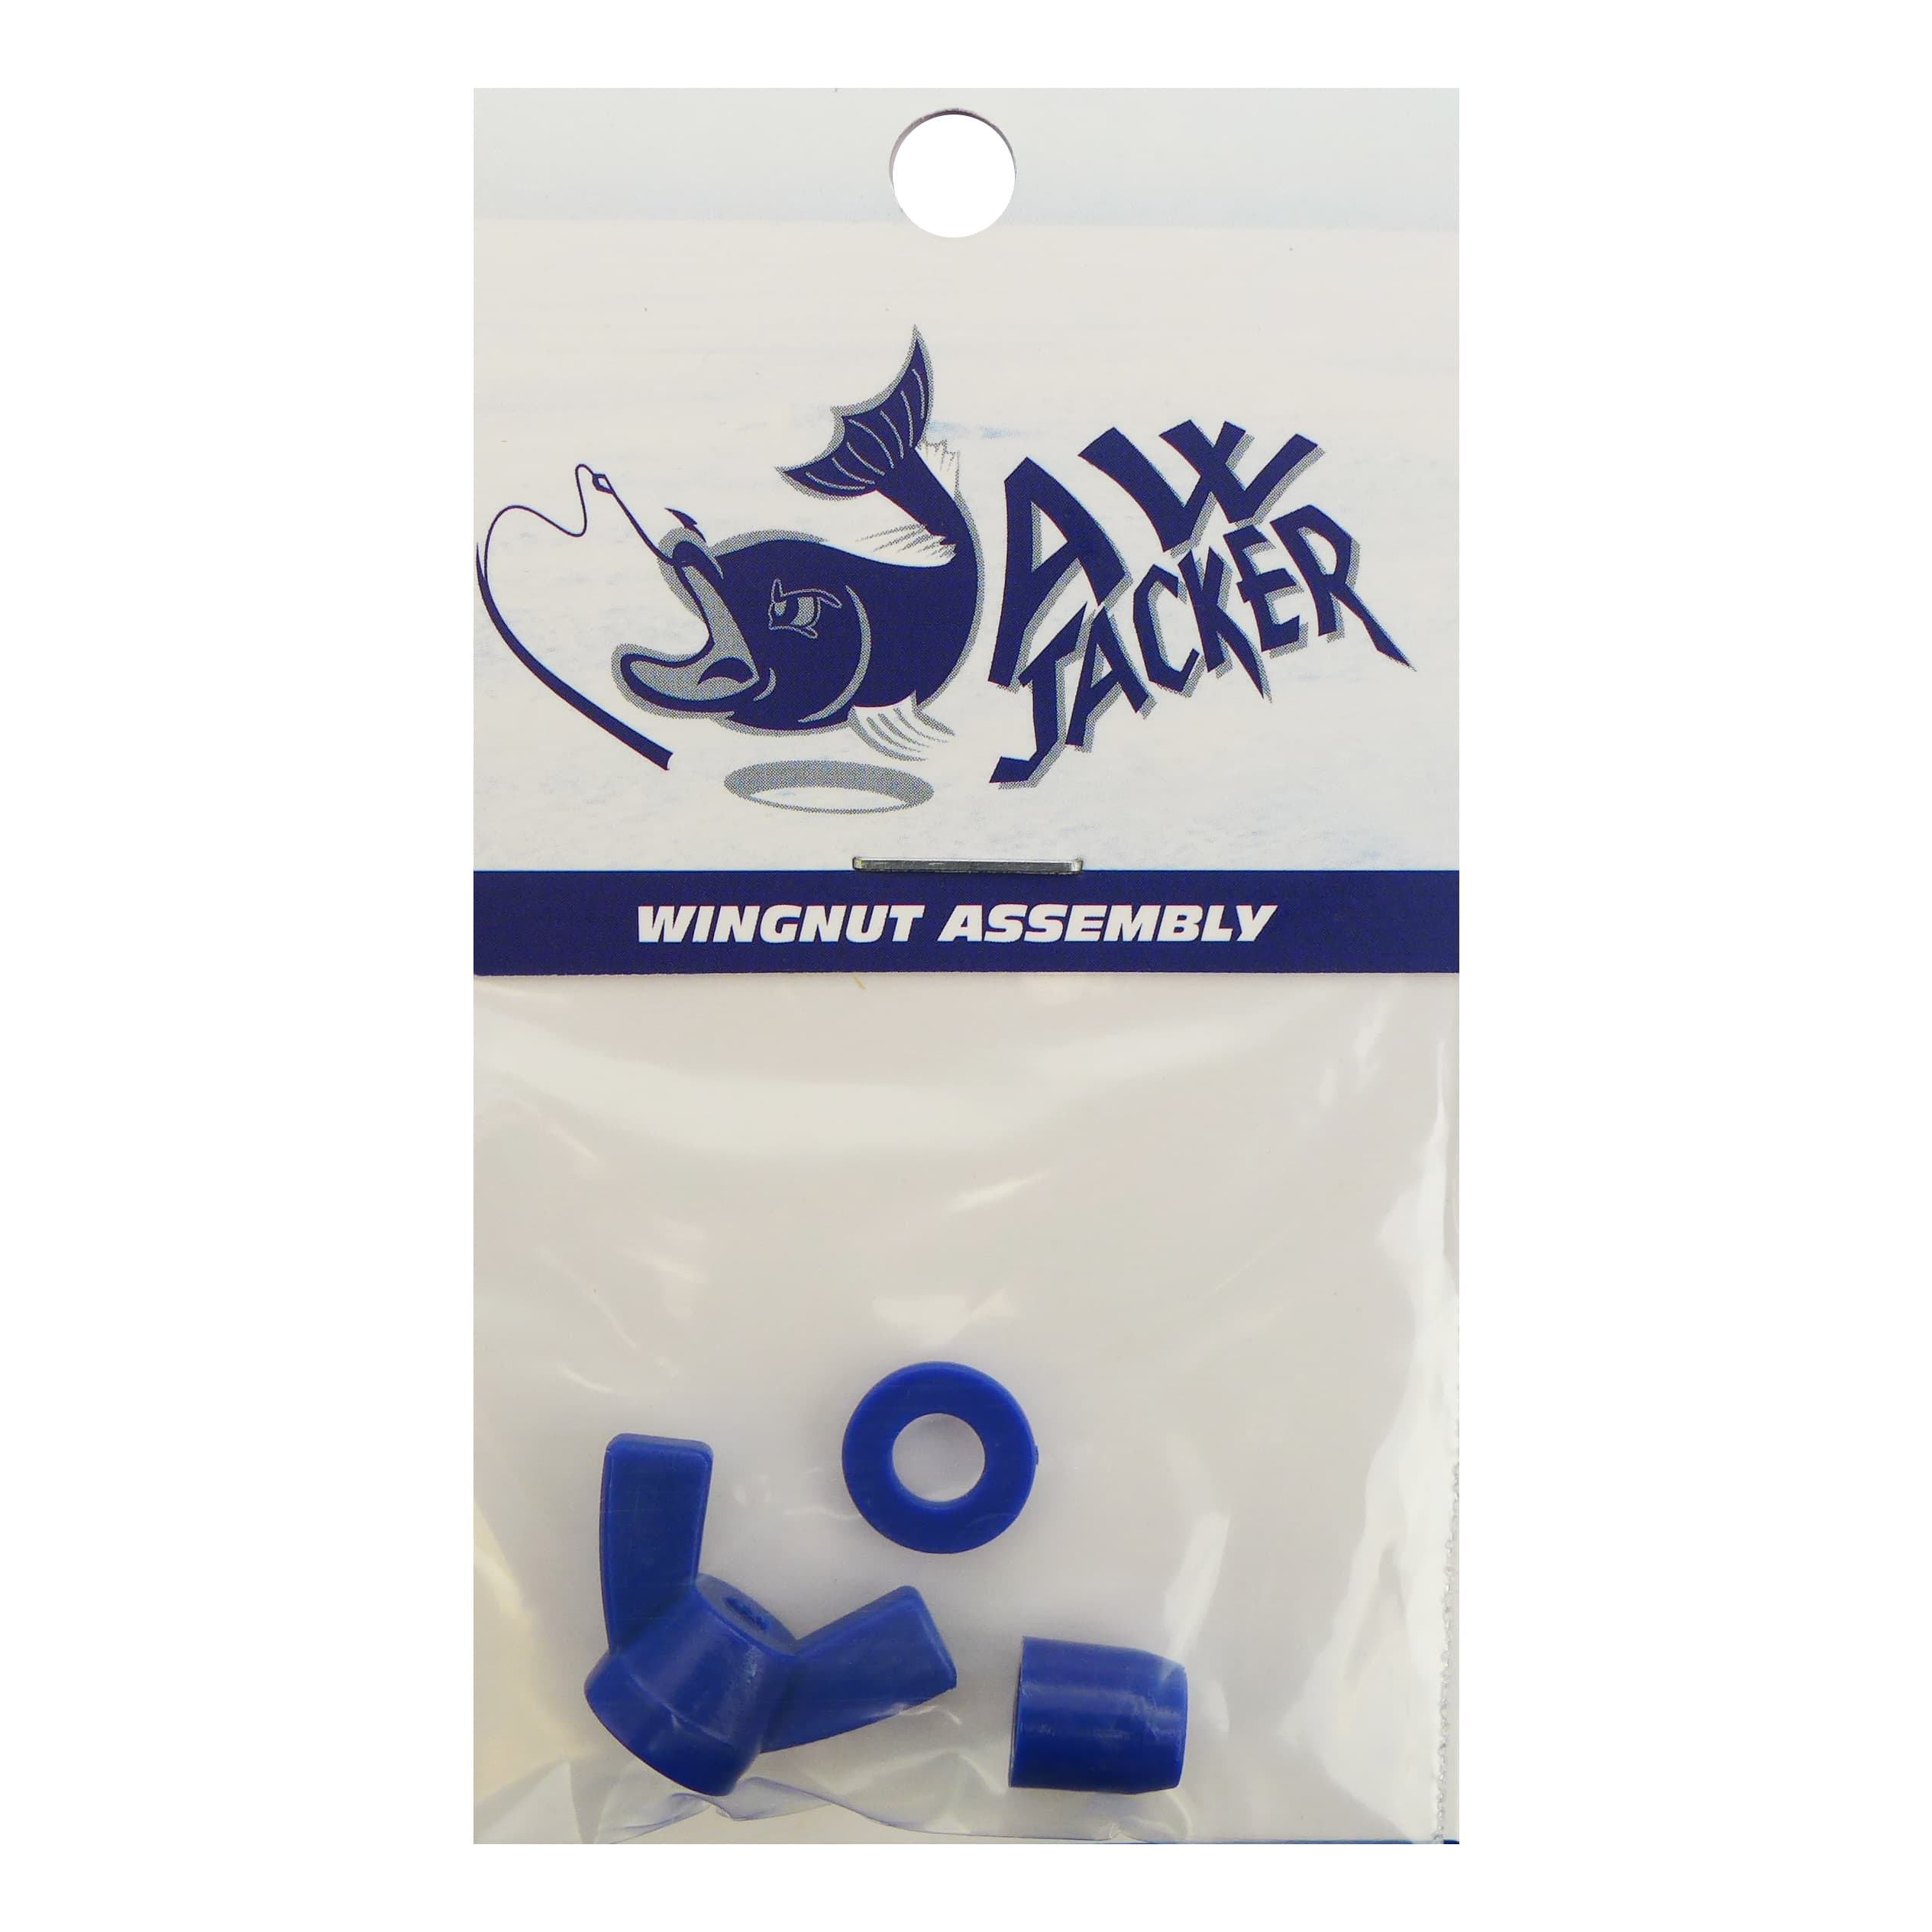 JawJacker Trigger Wingnut Assembly